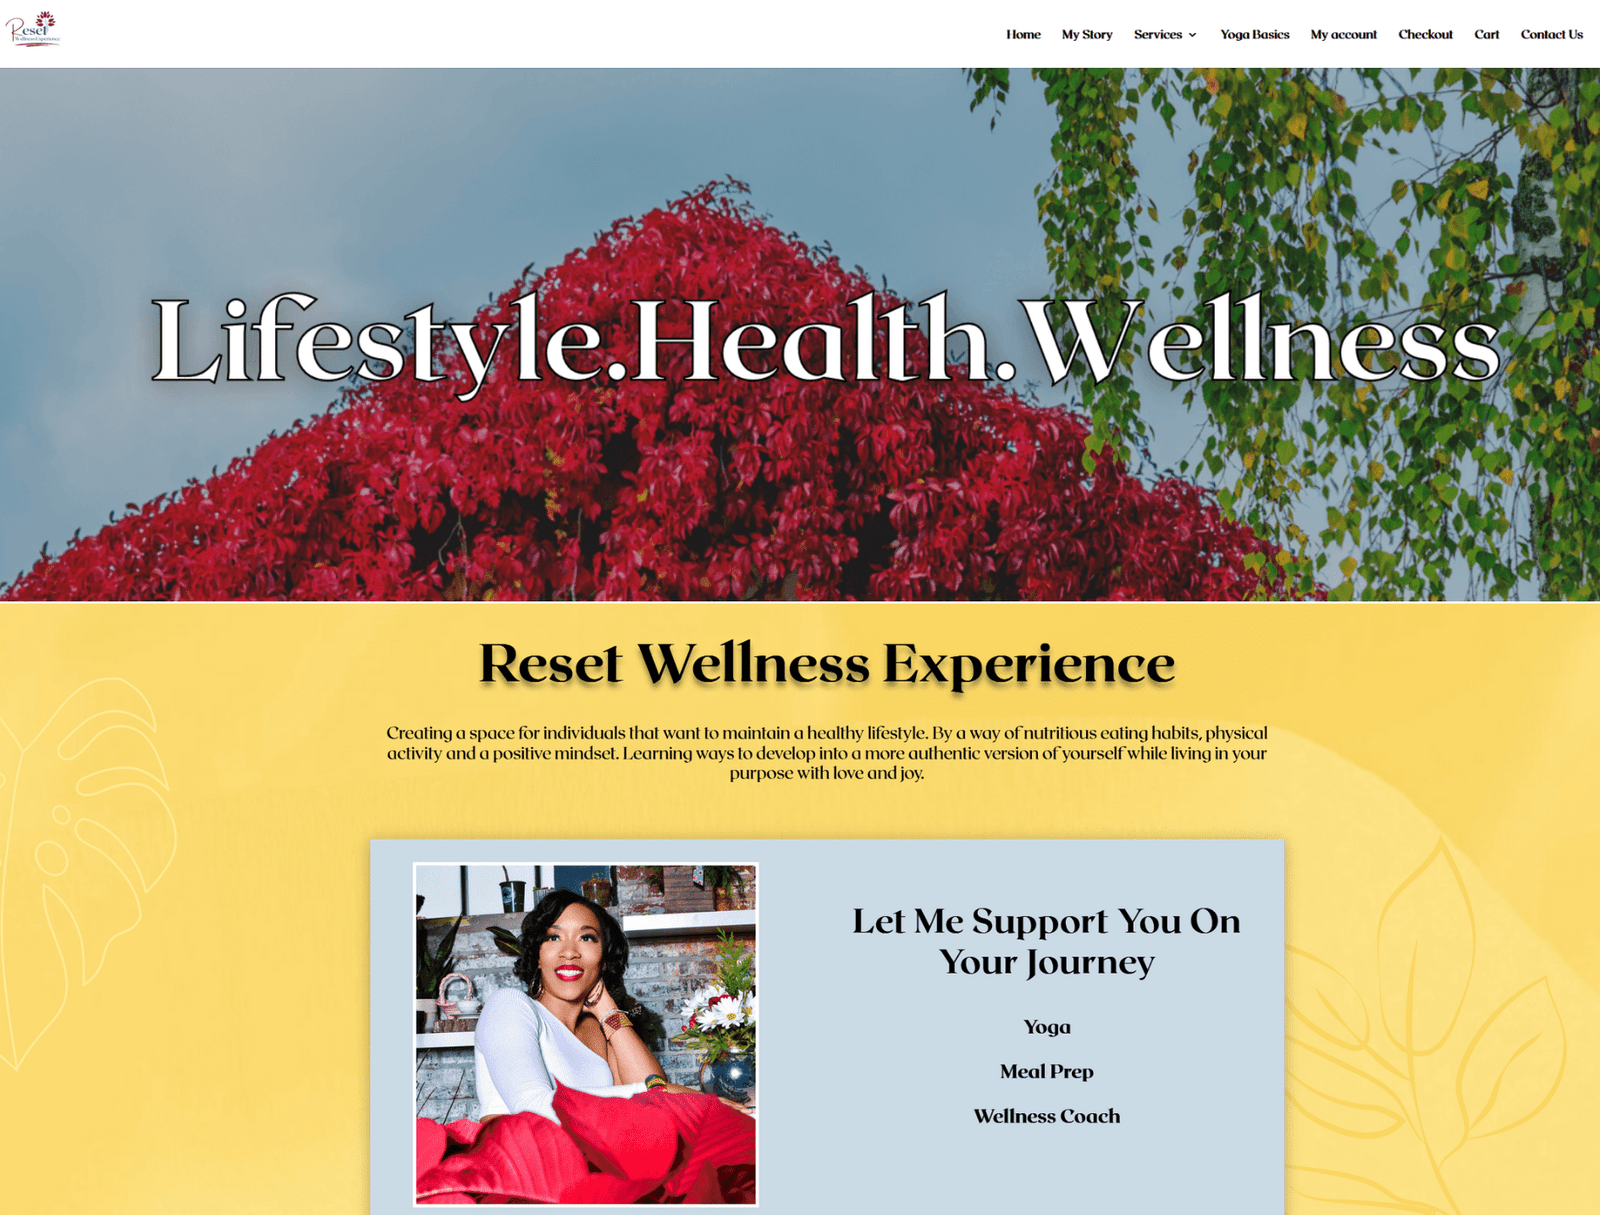 Reset Wellness Experience Website